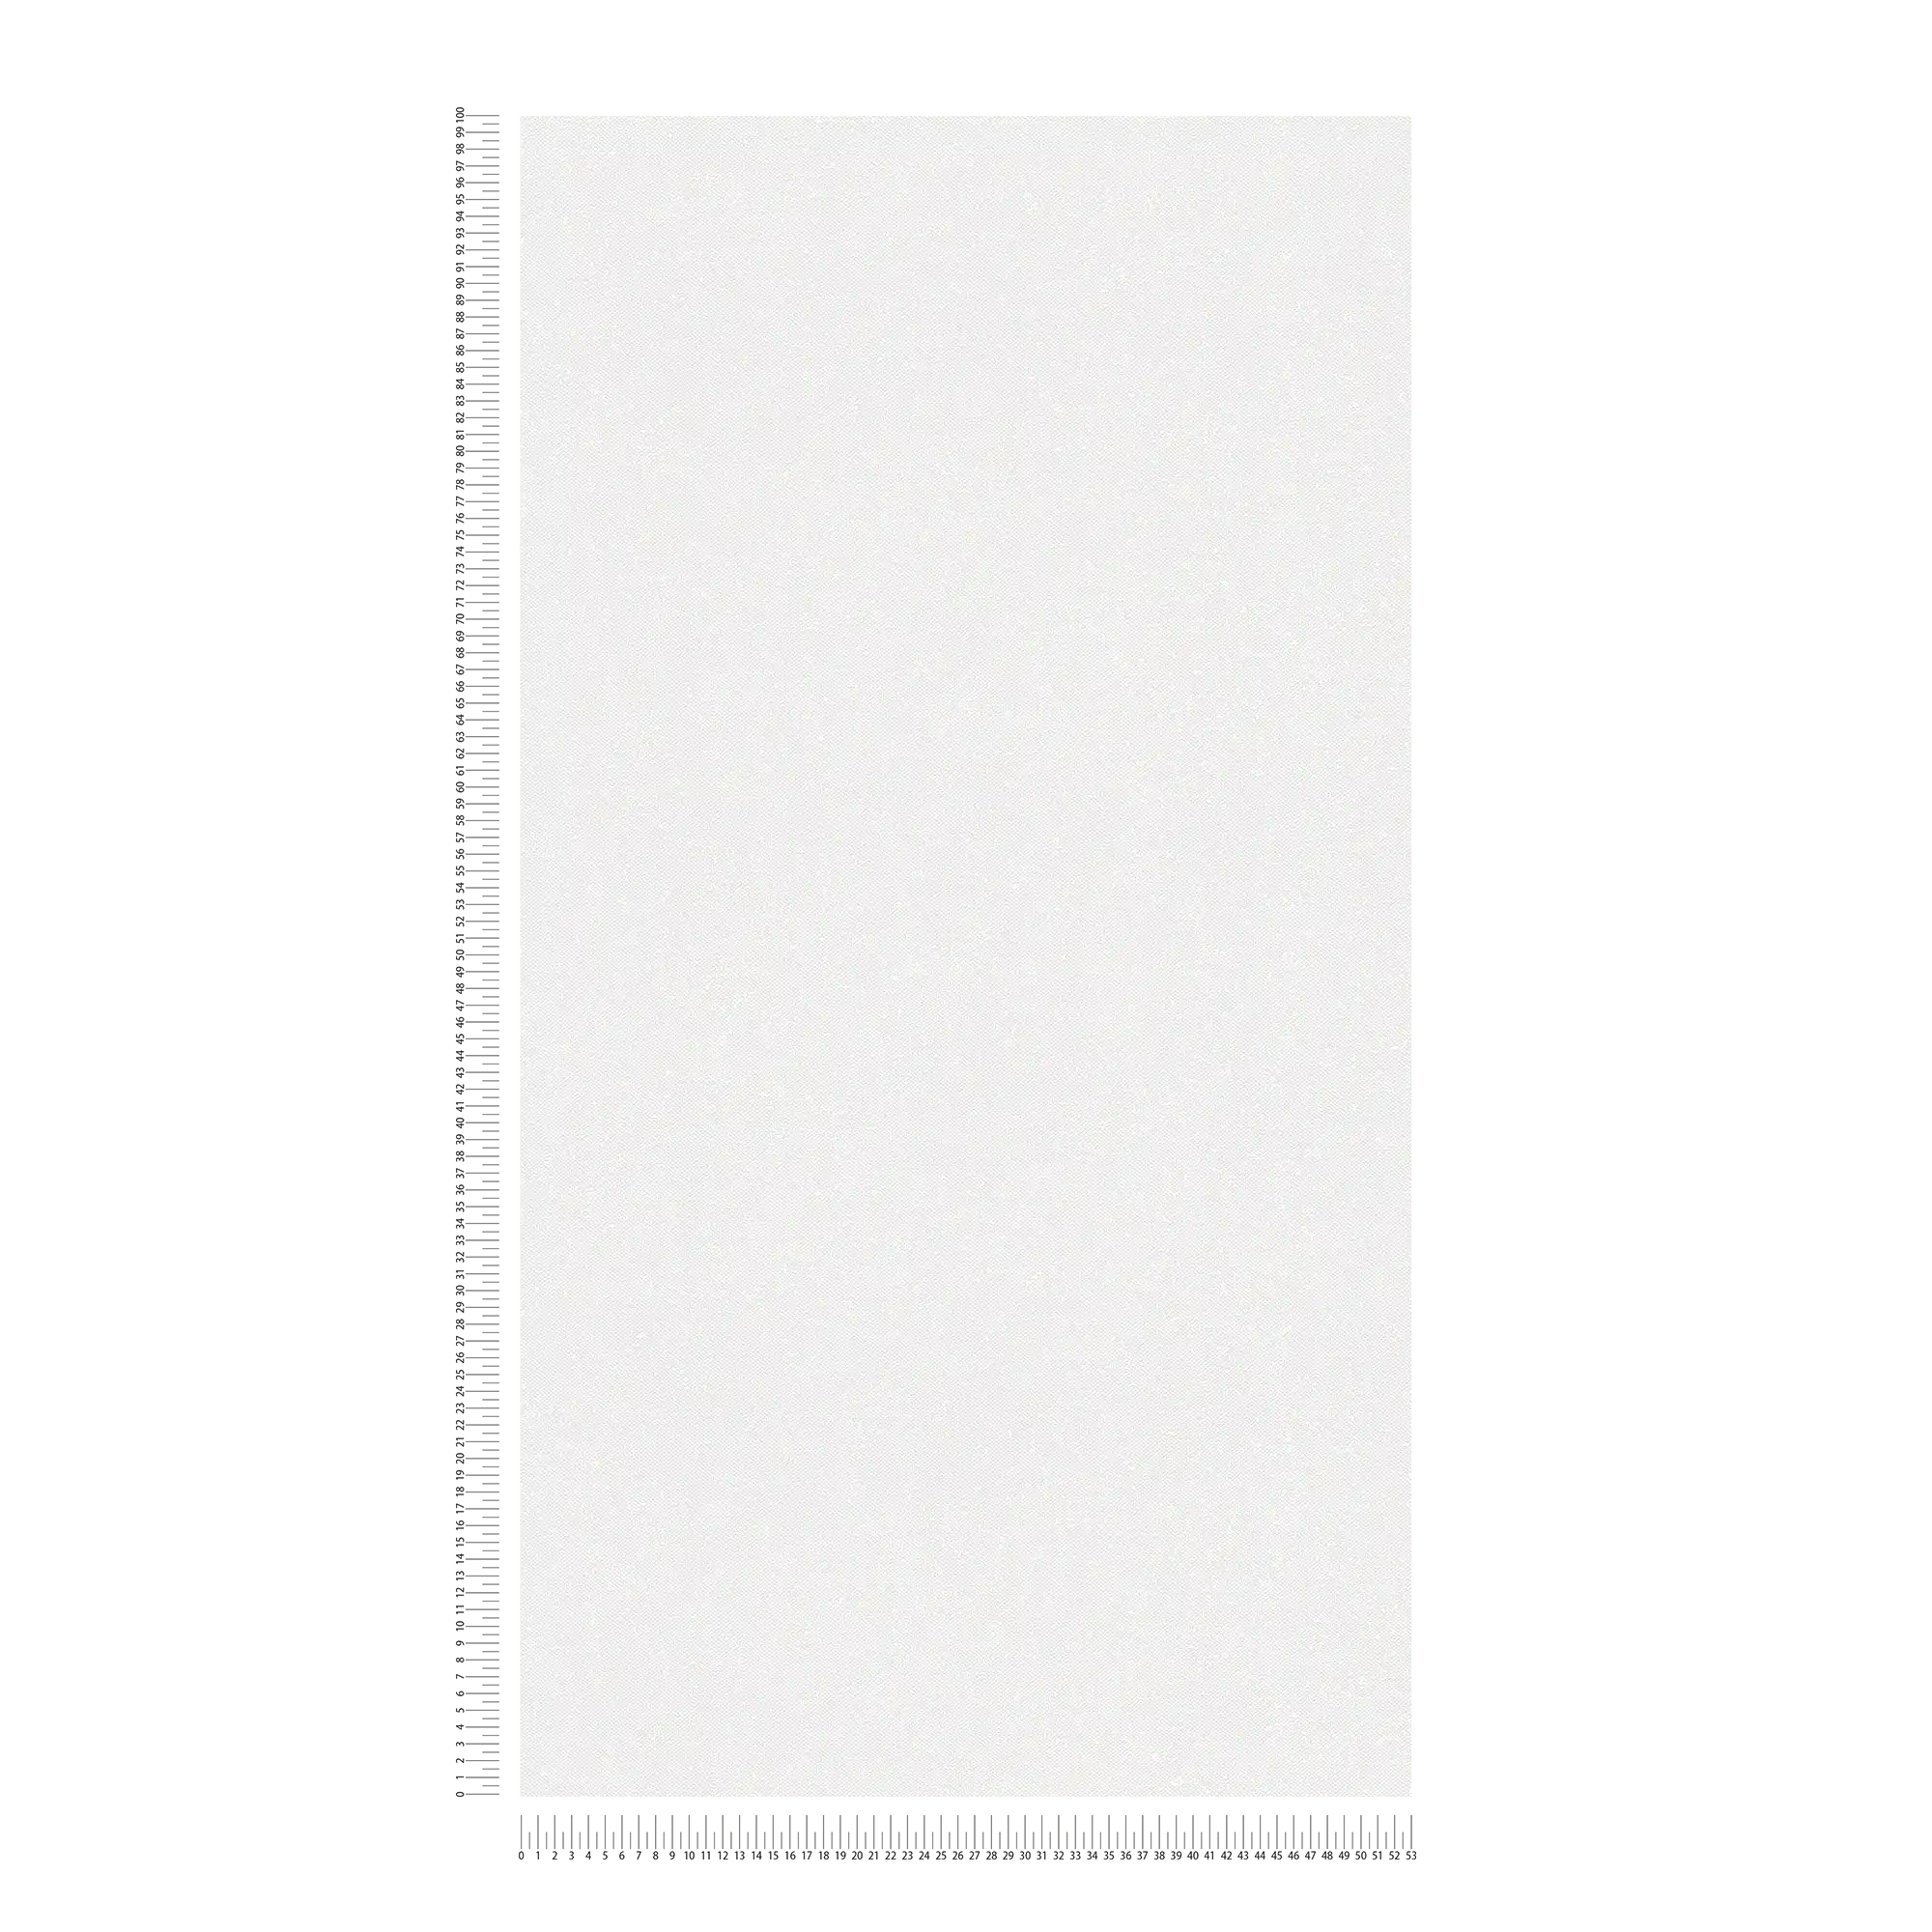             Textured wallpaper plain with linen look - cream, grey, white
        